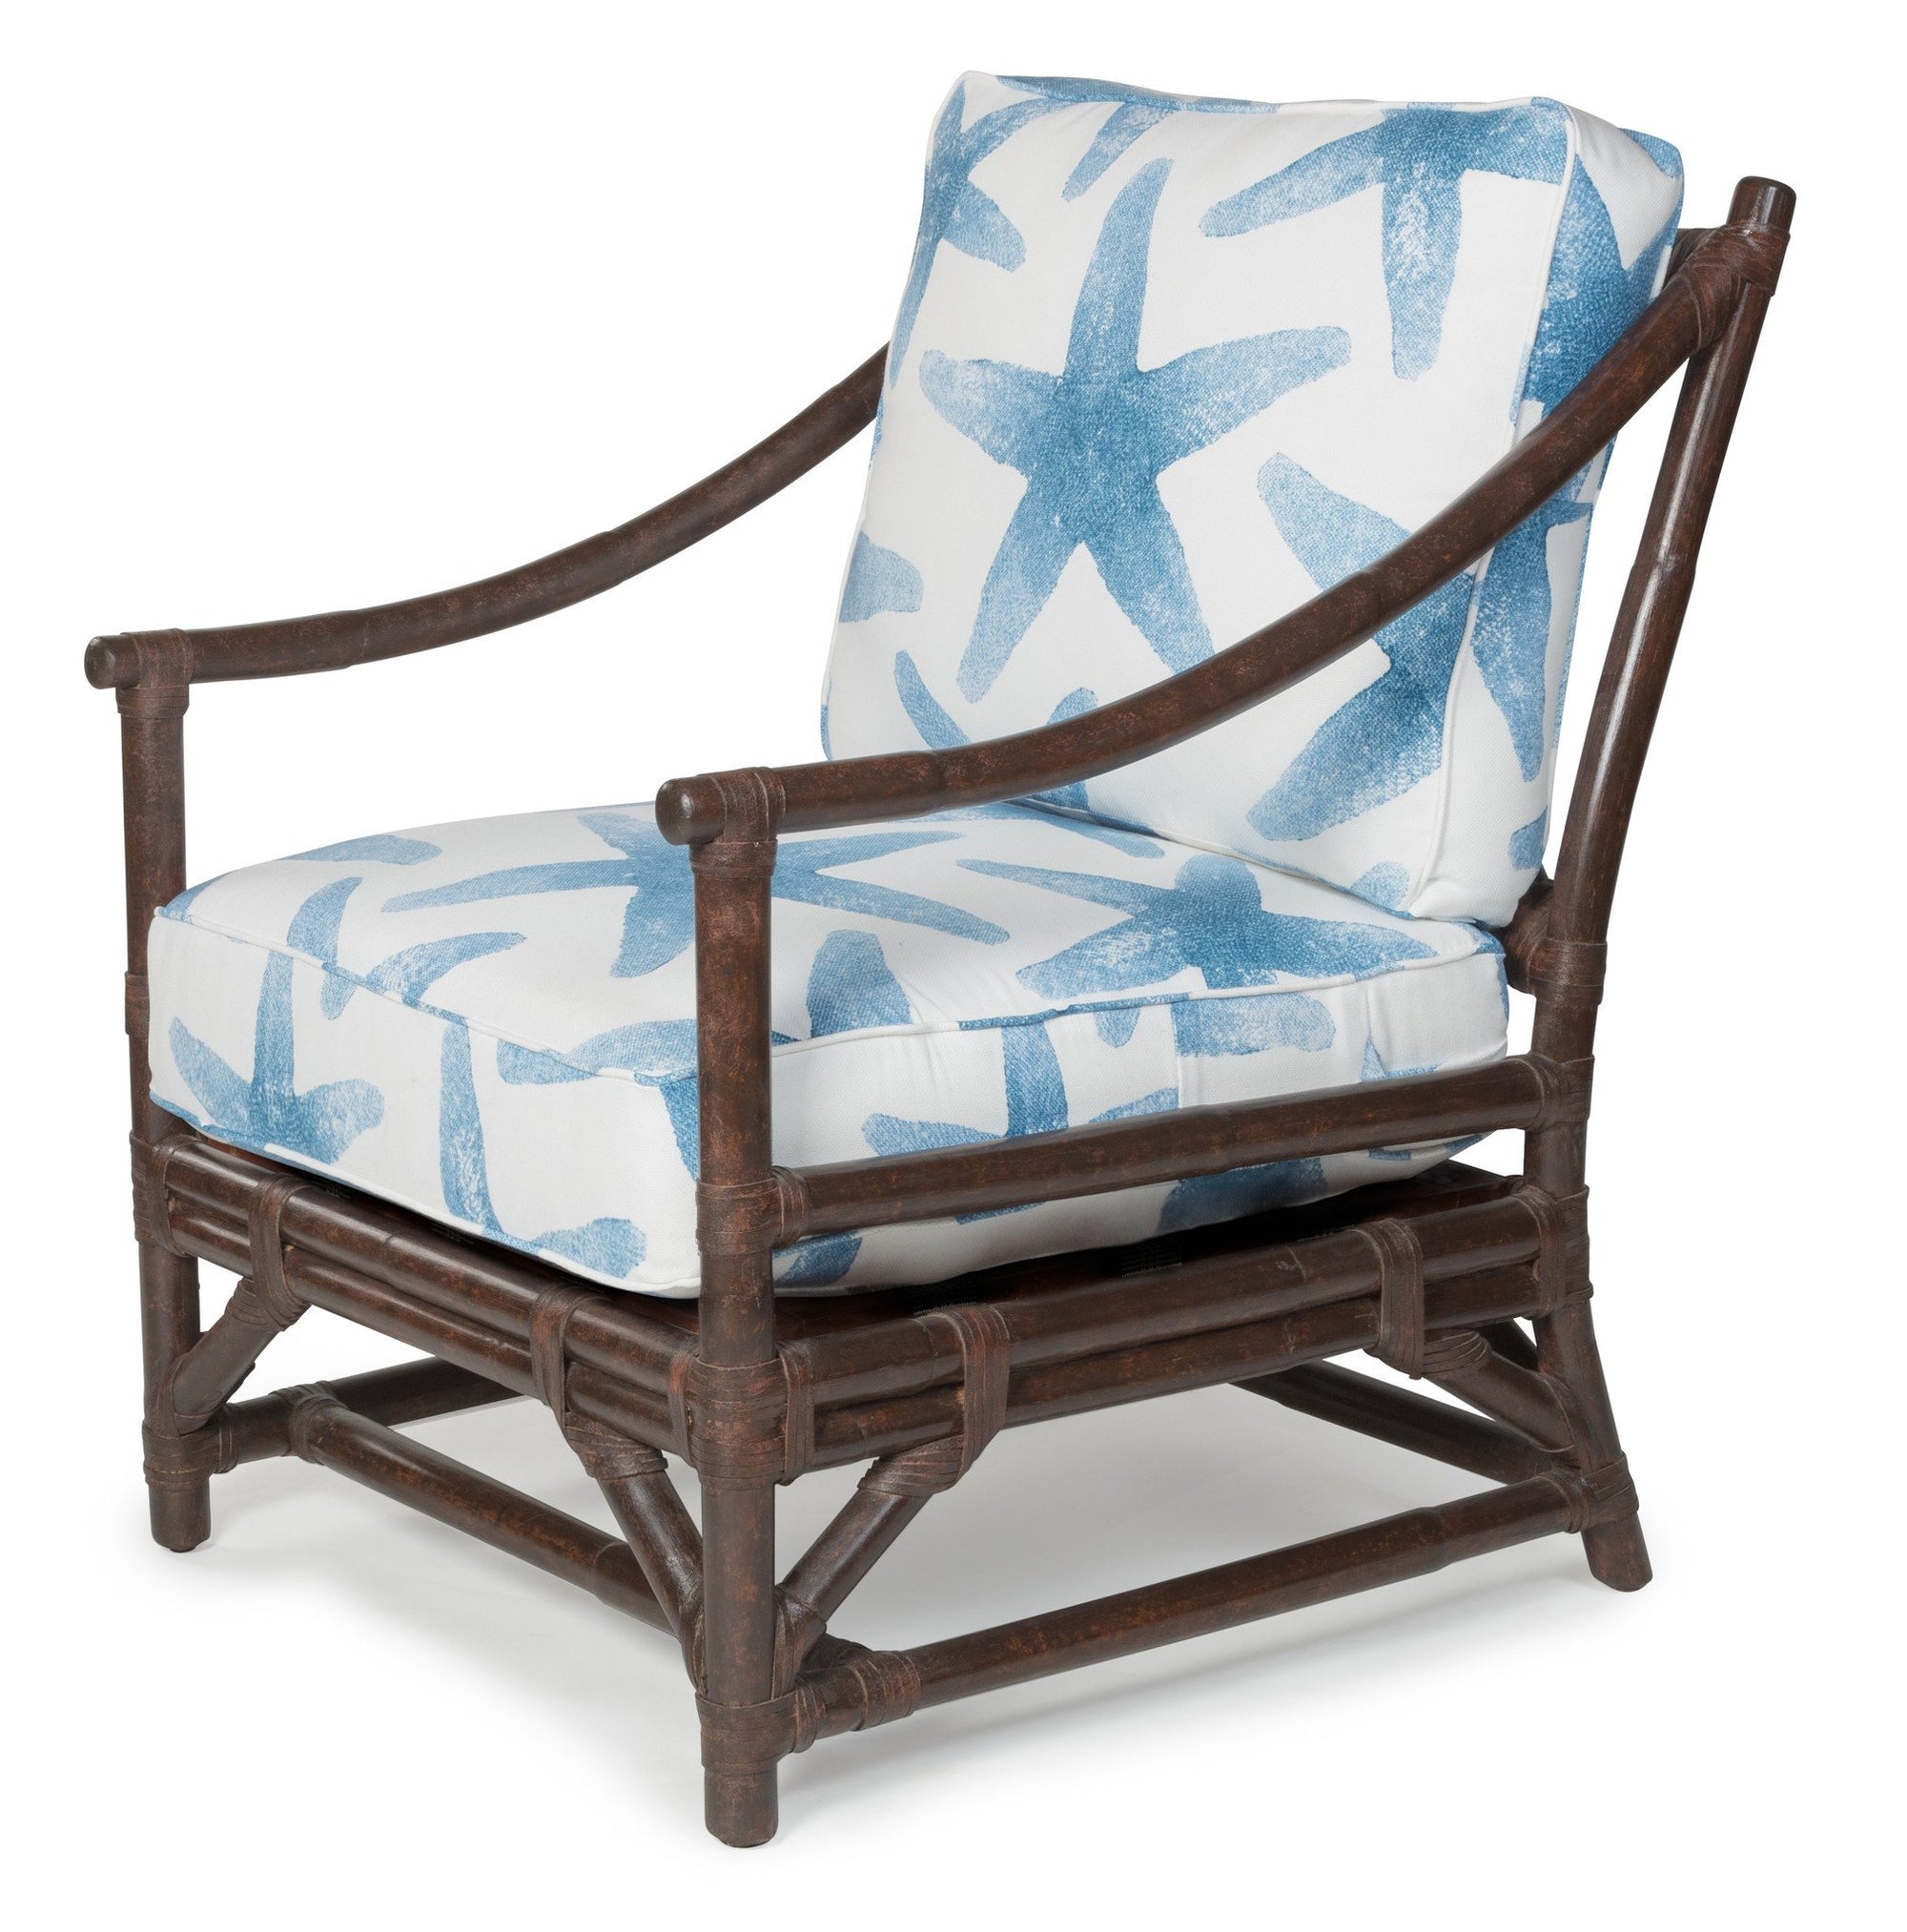 Designer Wicker & Rattan By Tribor Woodland Rattan Arm Chair by Designer Wicker from Tribor Chair - Rattan Imports